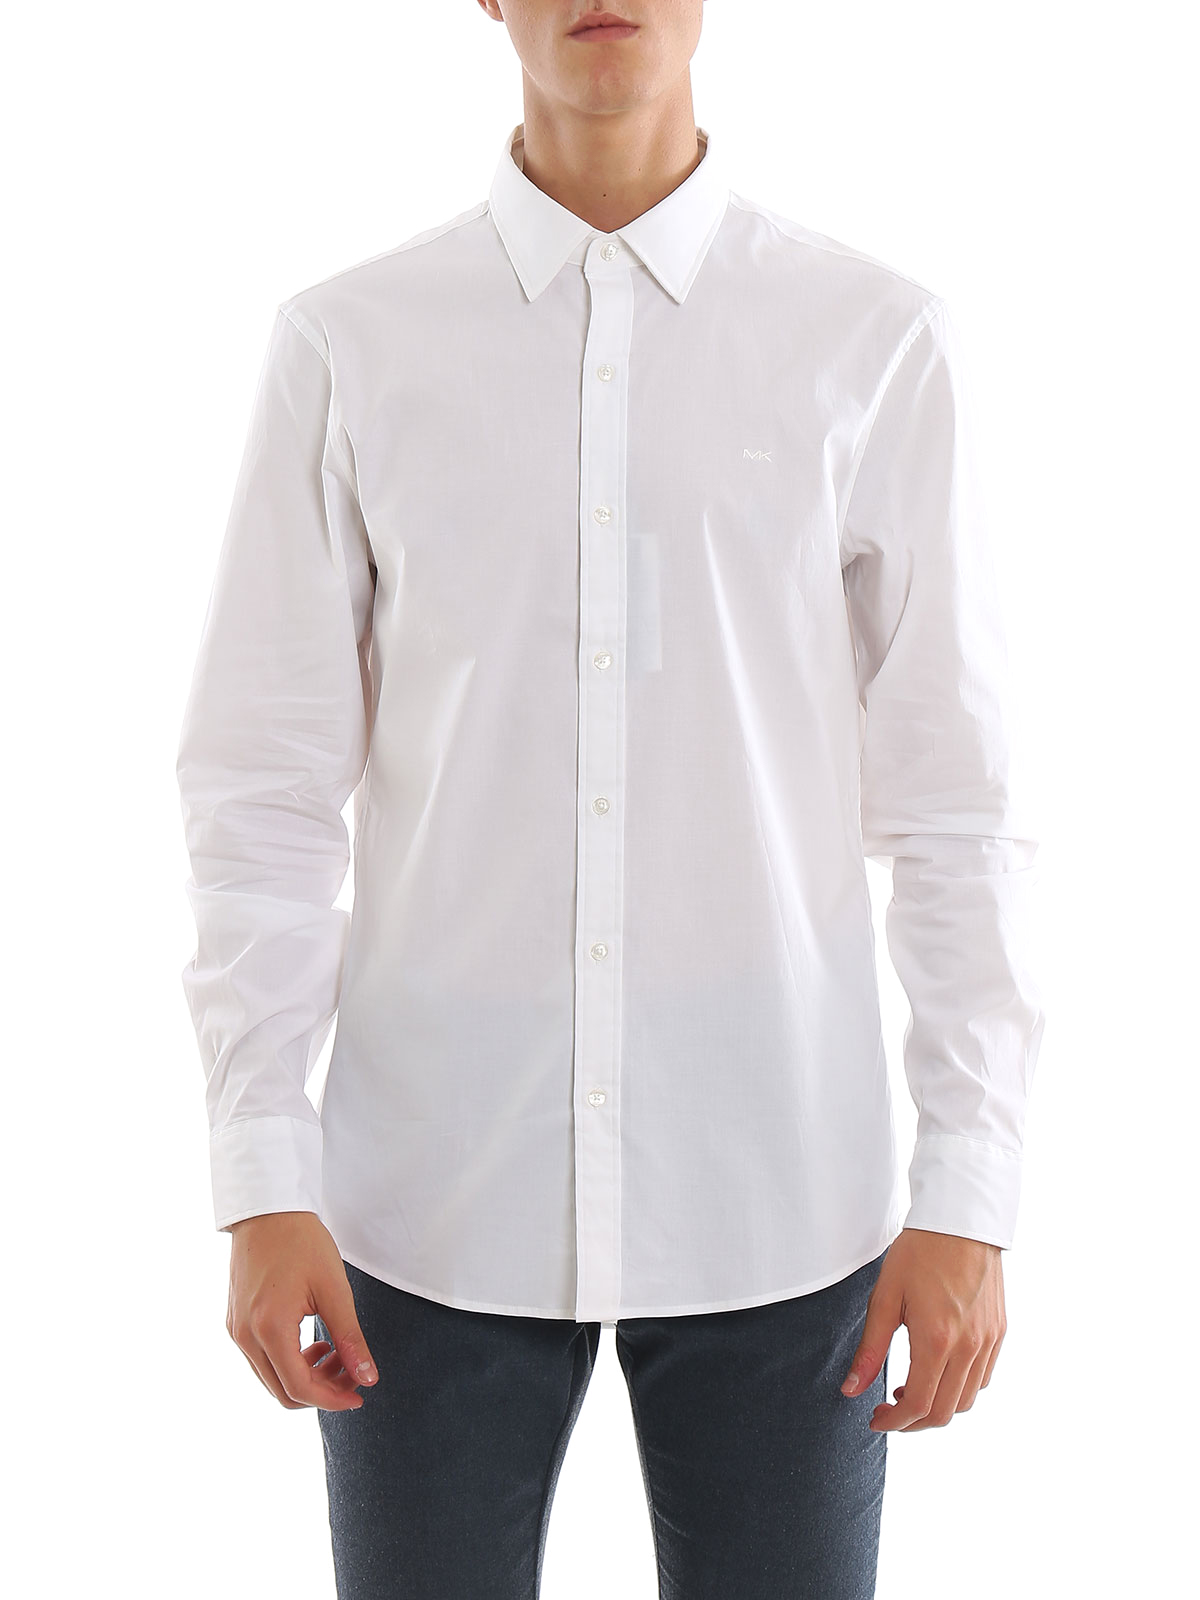 michael kors white shirt